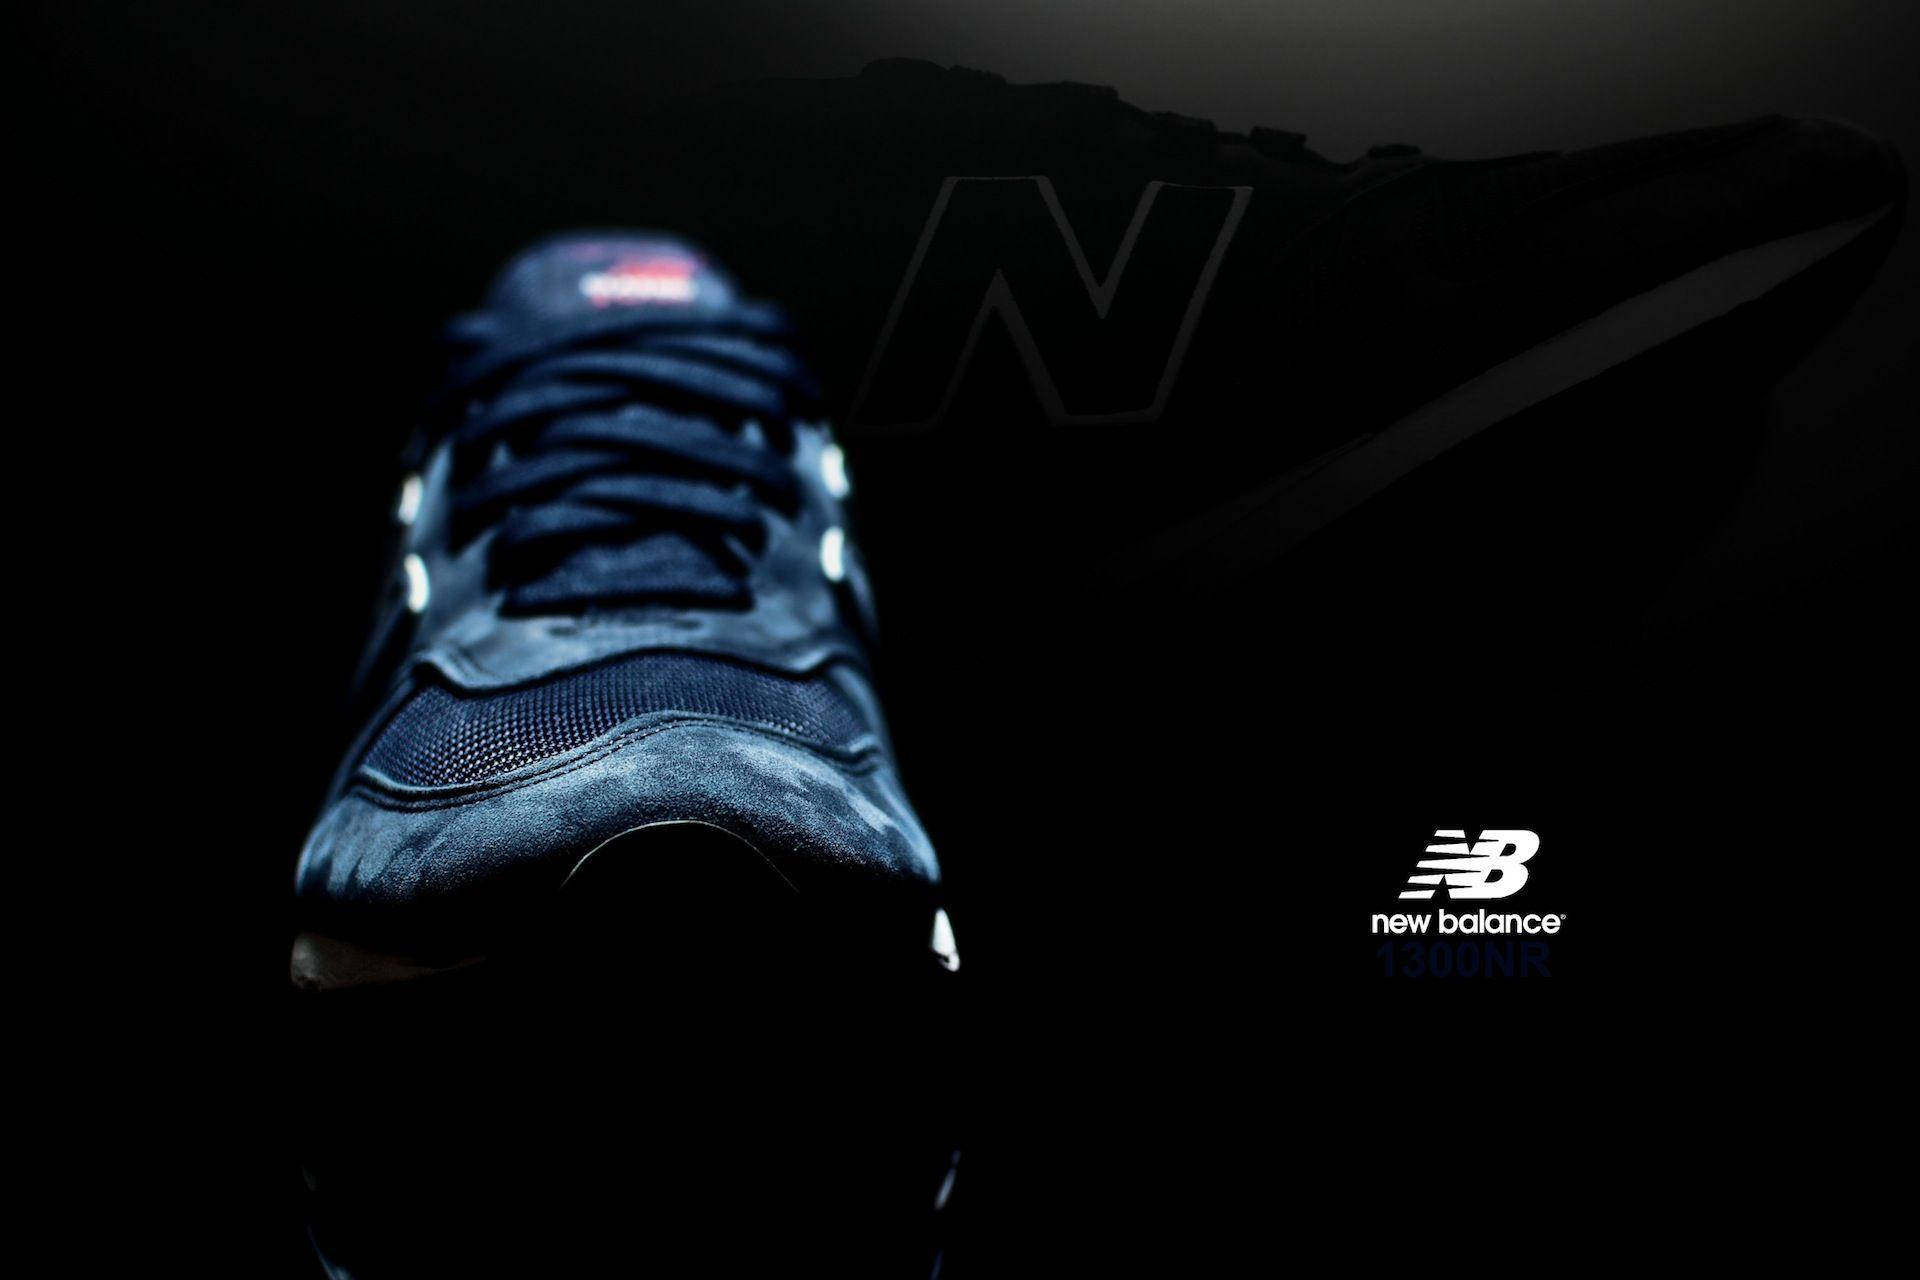 New Balance Shoe And Logo